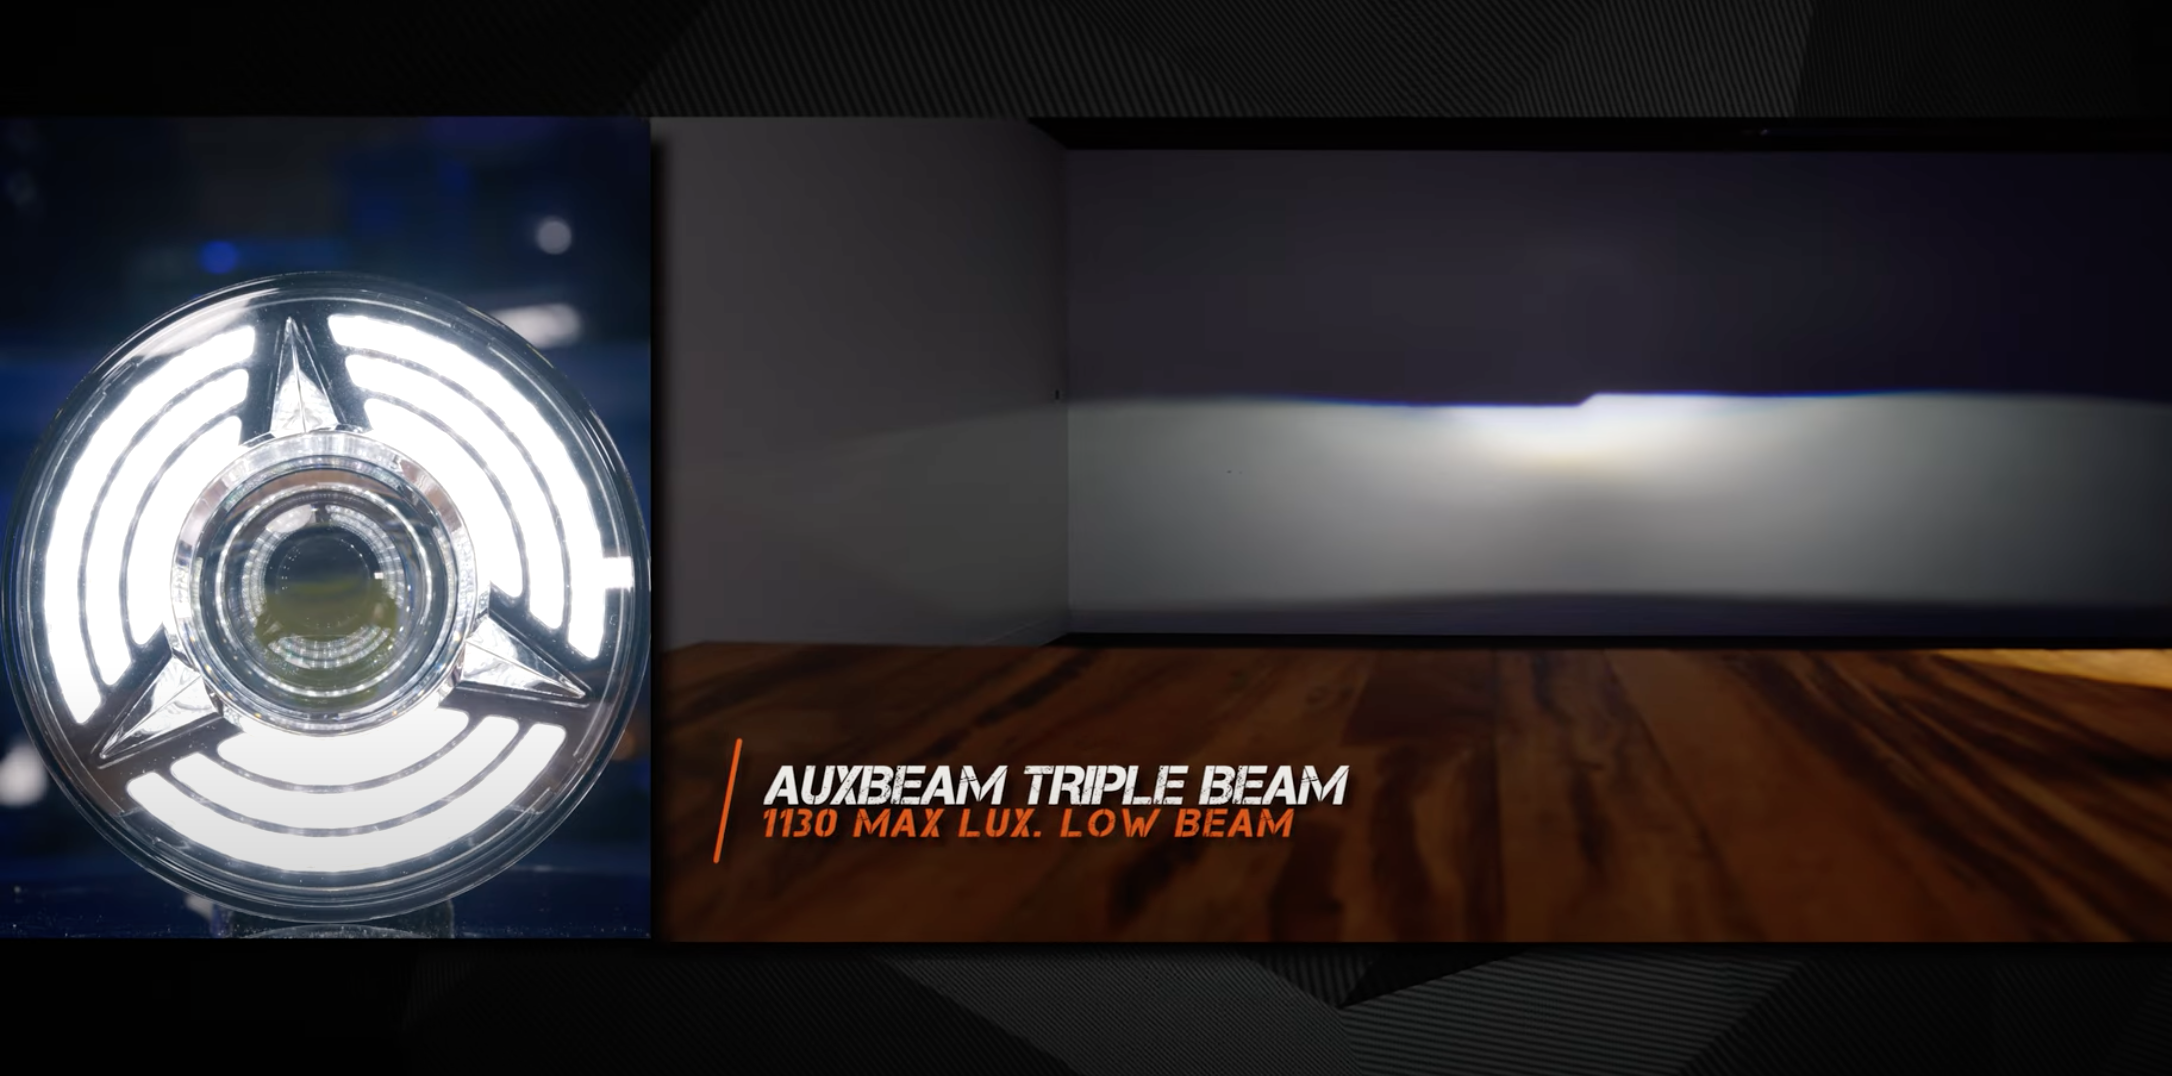 Auxbeam Triple Beam Comparison Test Motorcycle Jeep Wrangler 7-Inch Round LED Headlight 